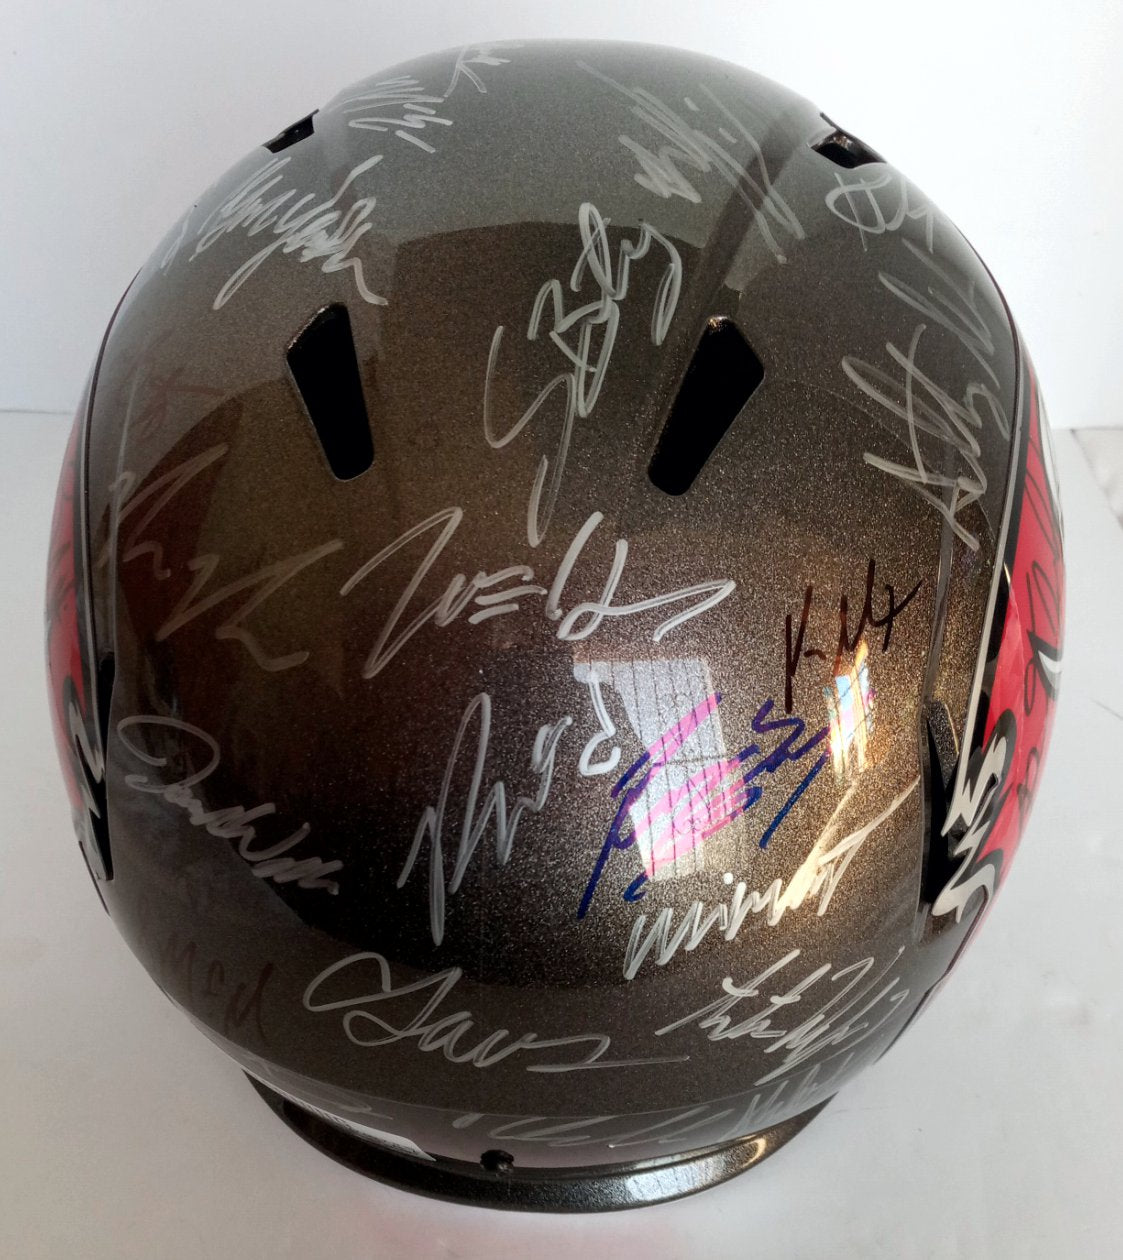 Tom Brady Tampa Bay Buccaneers 2020 Super Bowl champions team signed helmet